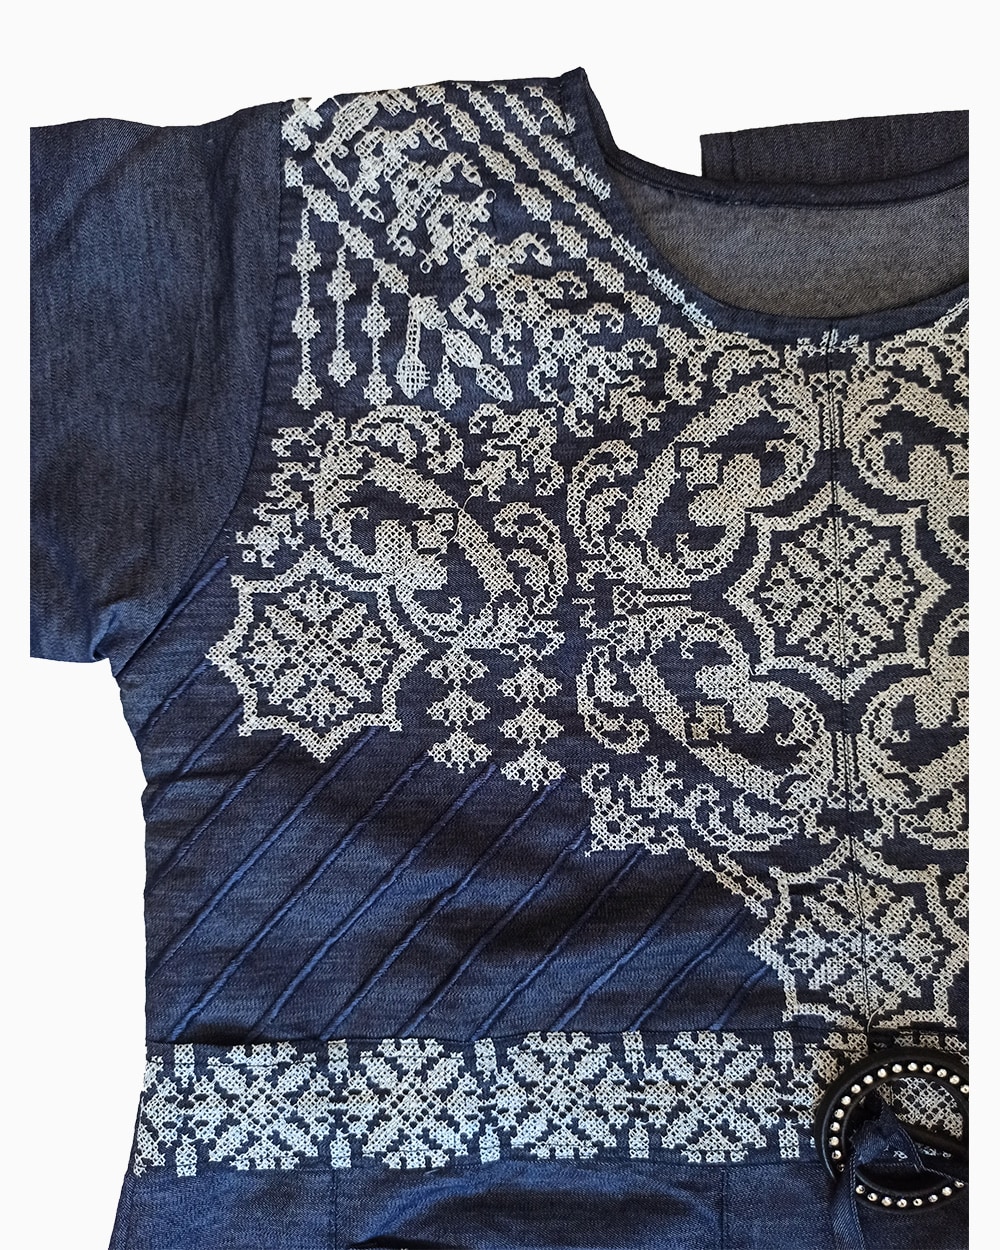 heavy Denim frock-cross stitch hand embroidery-2 pockets-mock embroidery waist belt-denim shirts for females online (3)